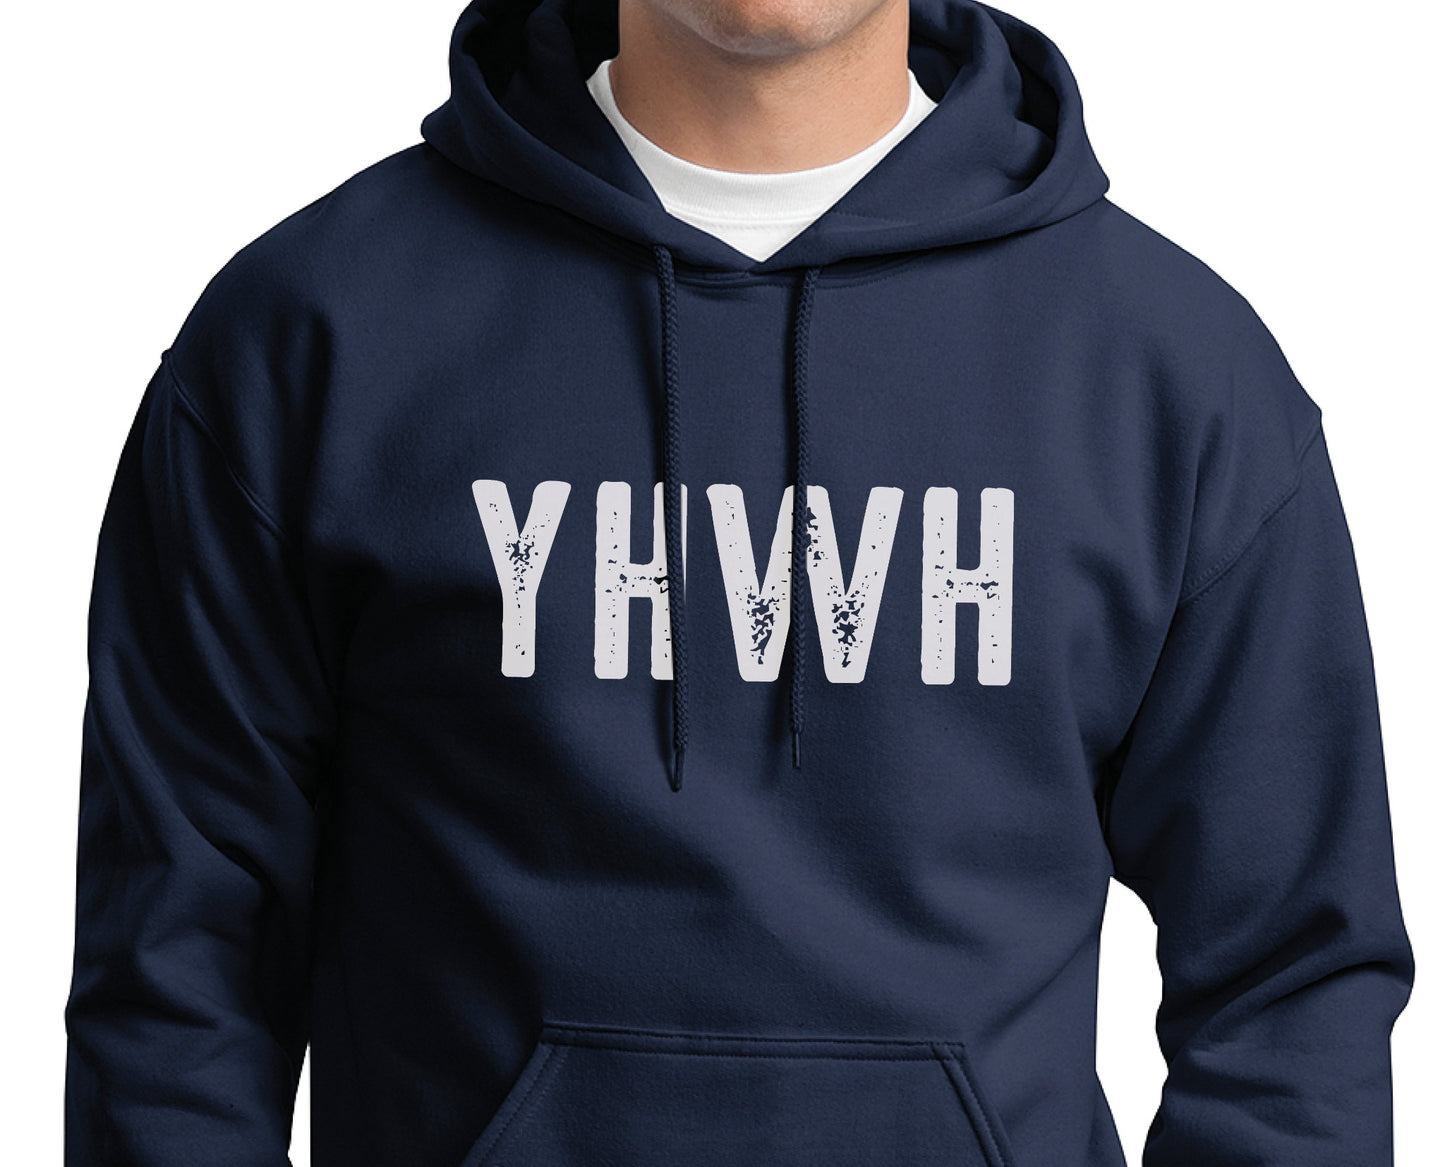 YHWH Hebrew Biblical Name of God Yahweh Christian aesthetic distressed design printed in white on cozy navy blue unisex hoodie sweatshirt for men